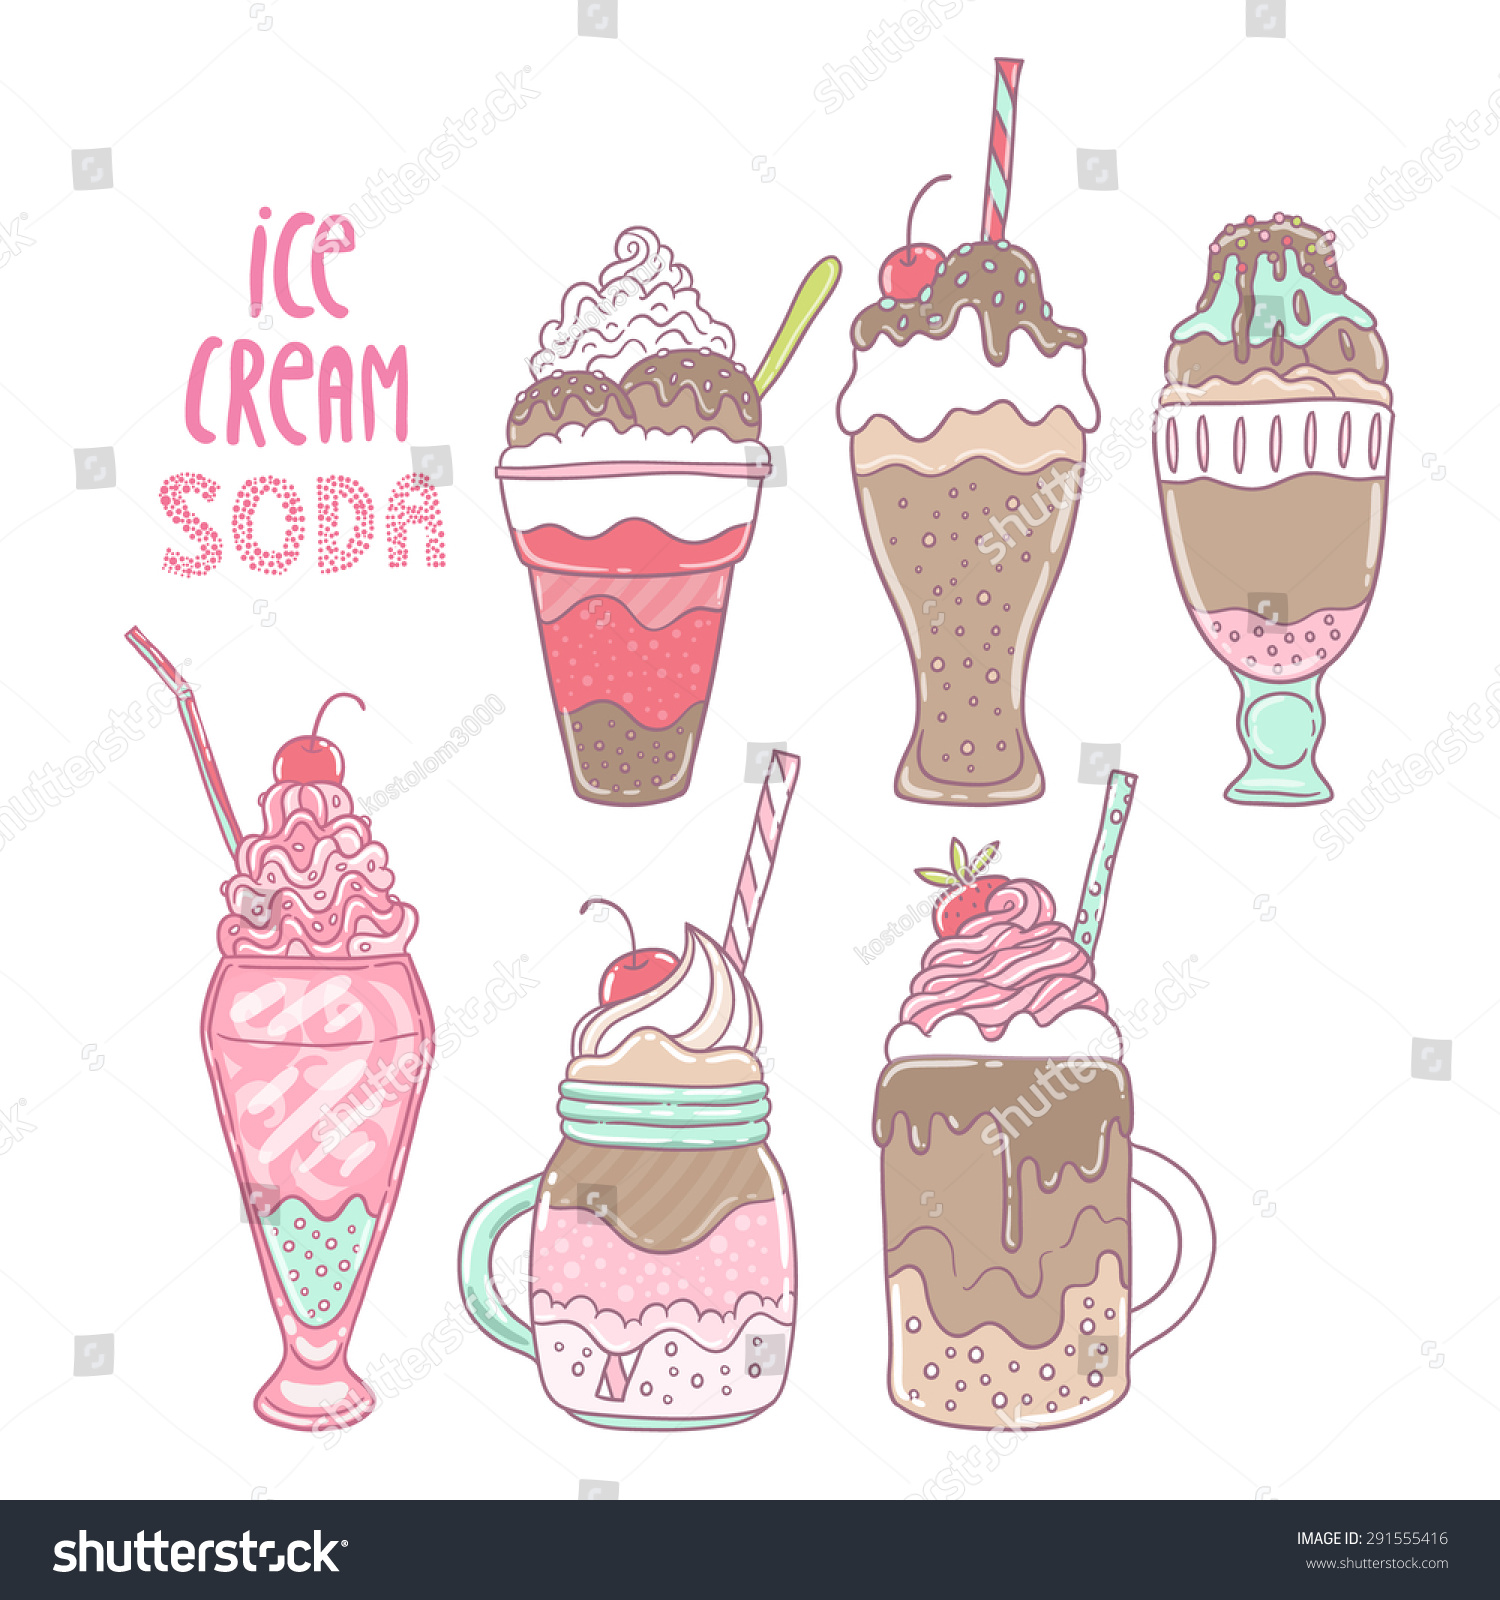 ice cream soda clipart free - photo #47